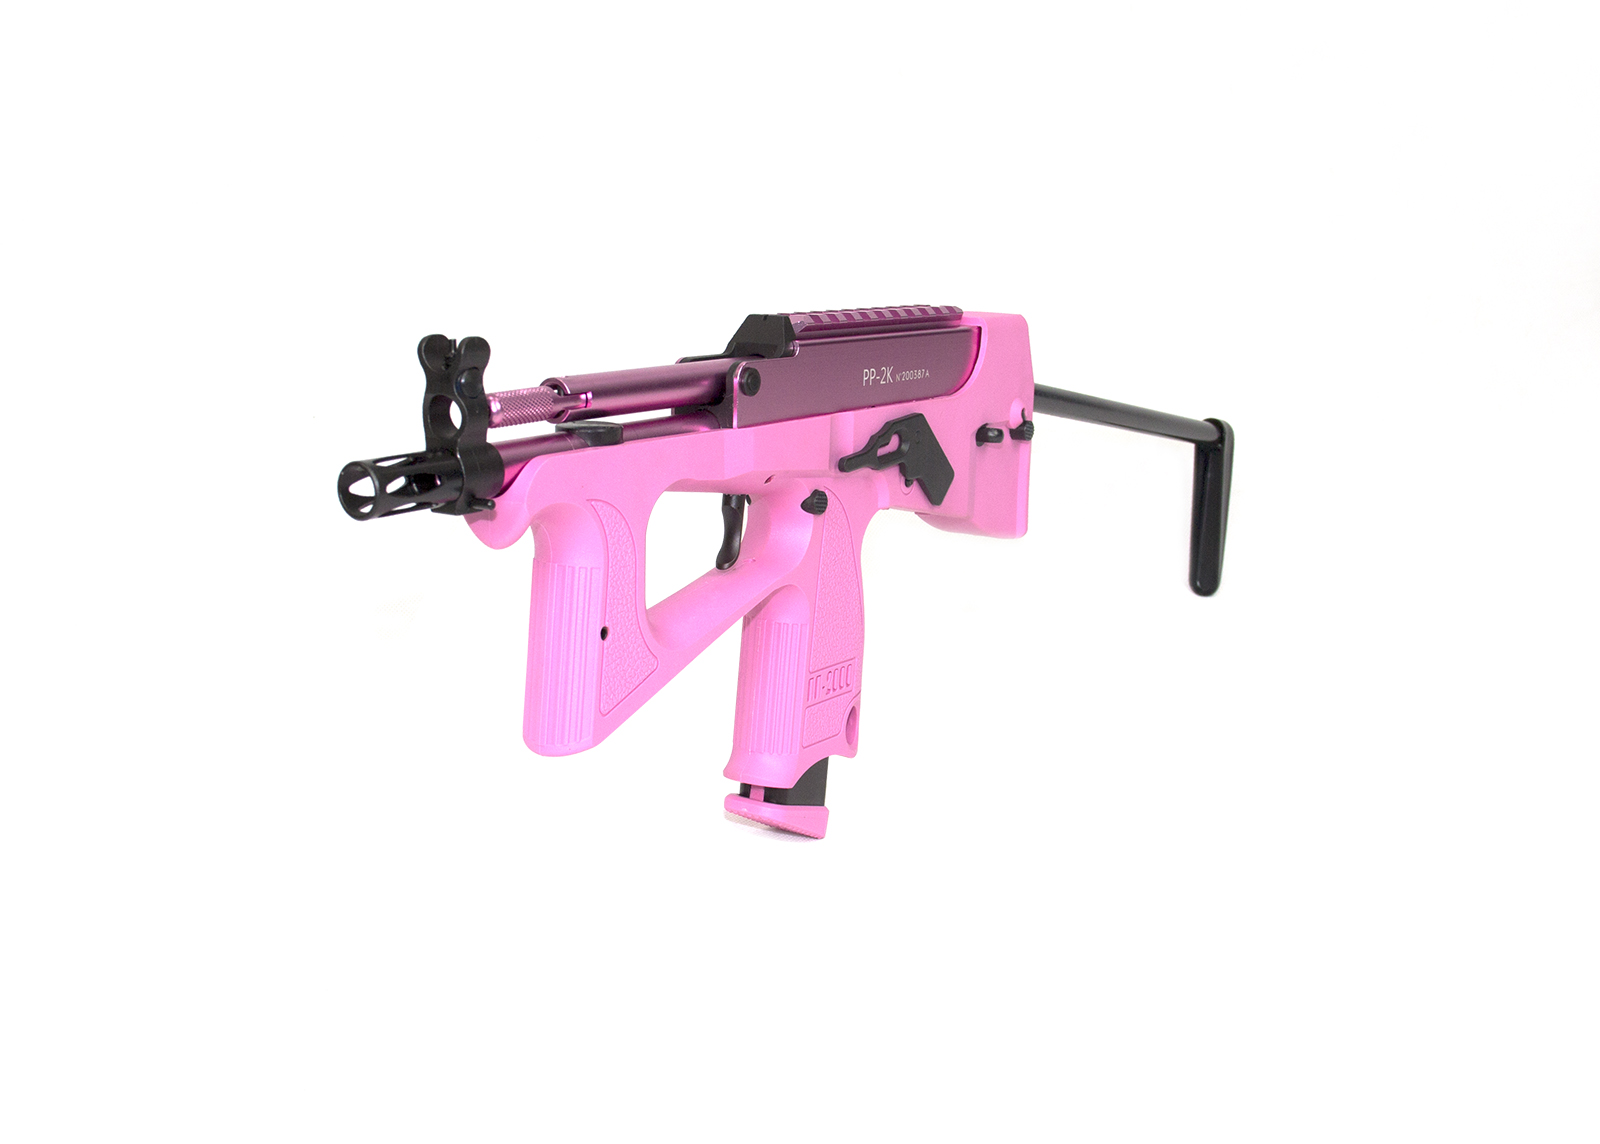 PP-2K 9mm Gas Blow Back Submachine Gun-Pink (with gas magazine)